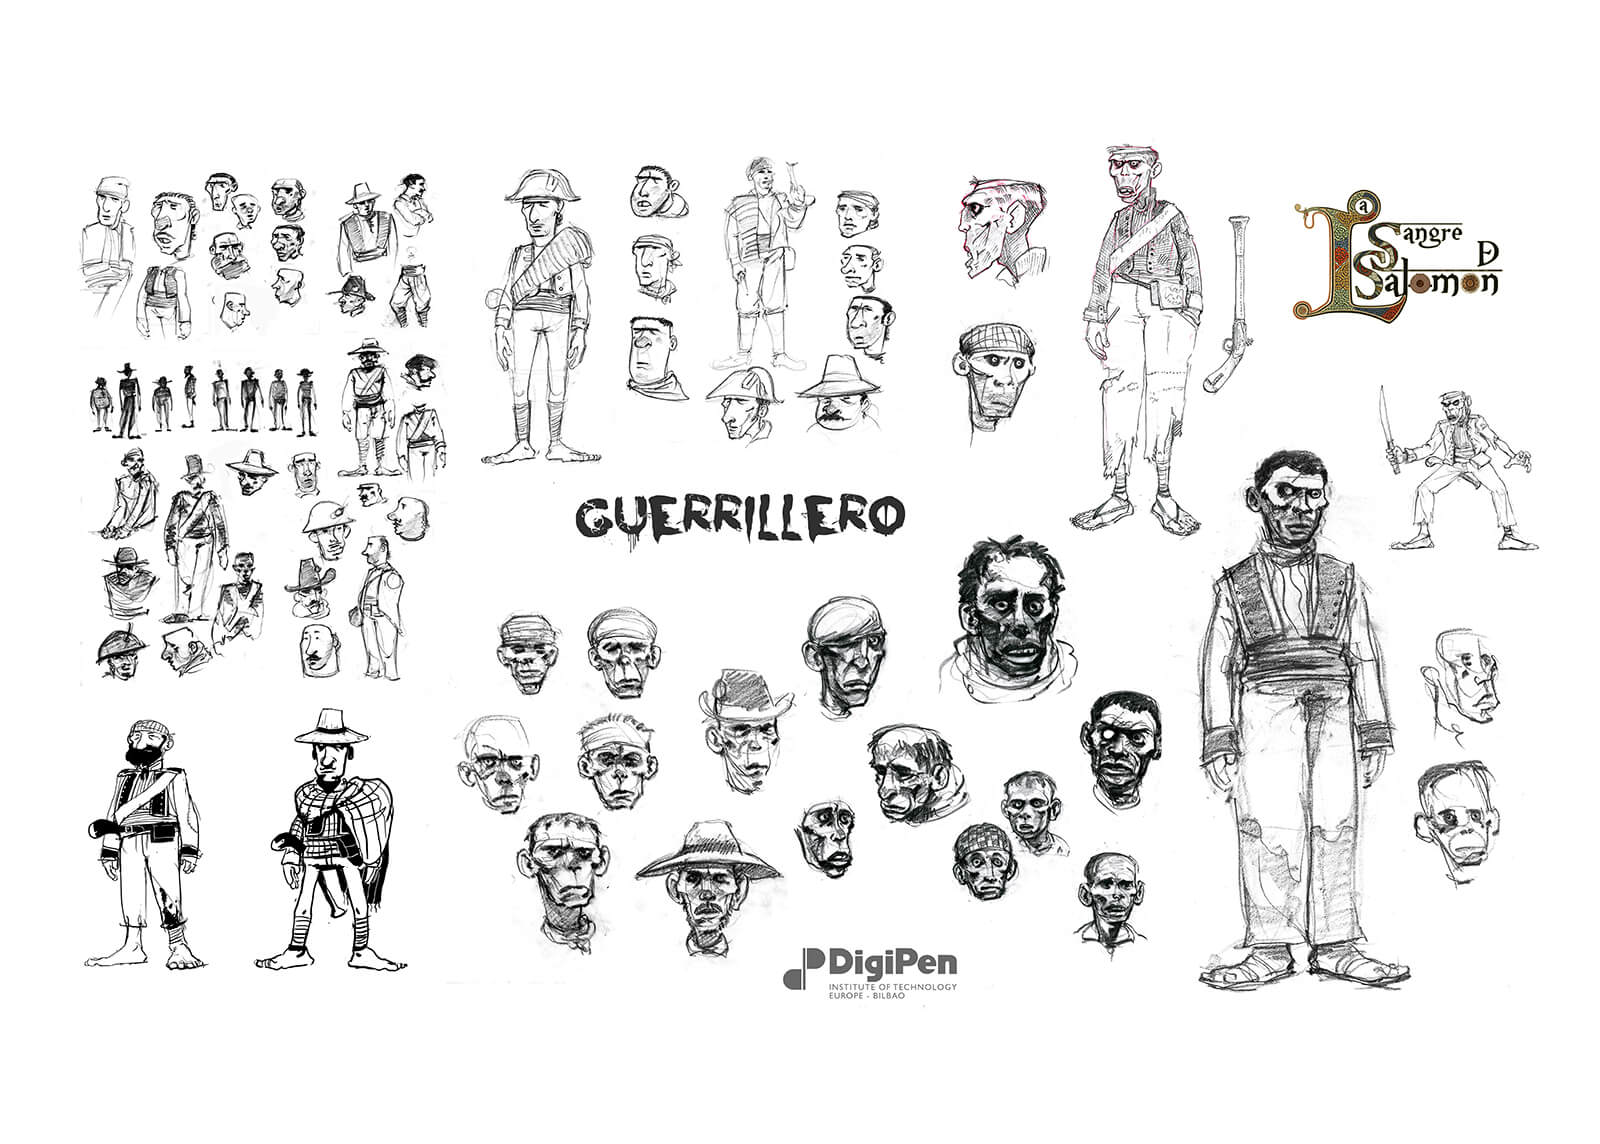 Concept drawings of Guerrillero from La Sangre de Salomon